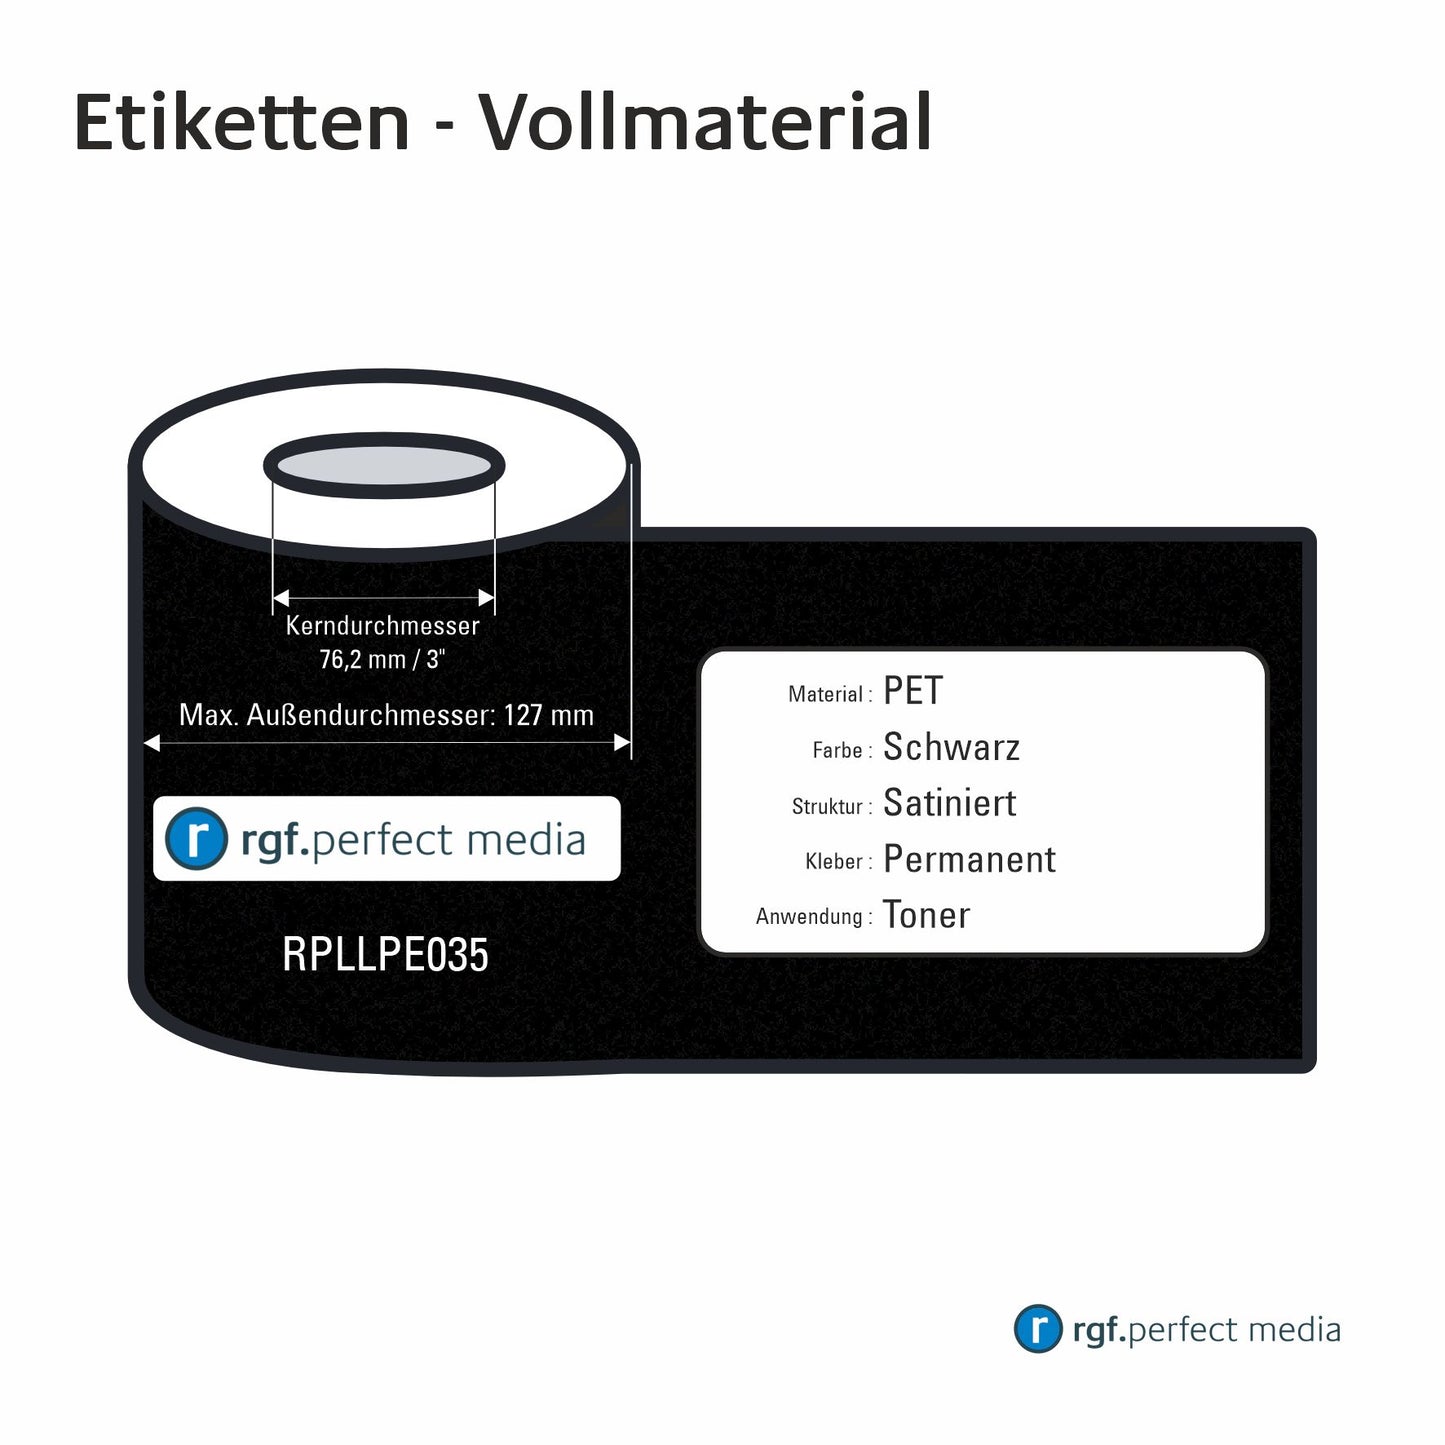 RPLLPE035 - PET-Etiketten, Schwarz, Satiniert, Permanent, Toner / LED / Laser - Vollmaterial 130mm